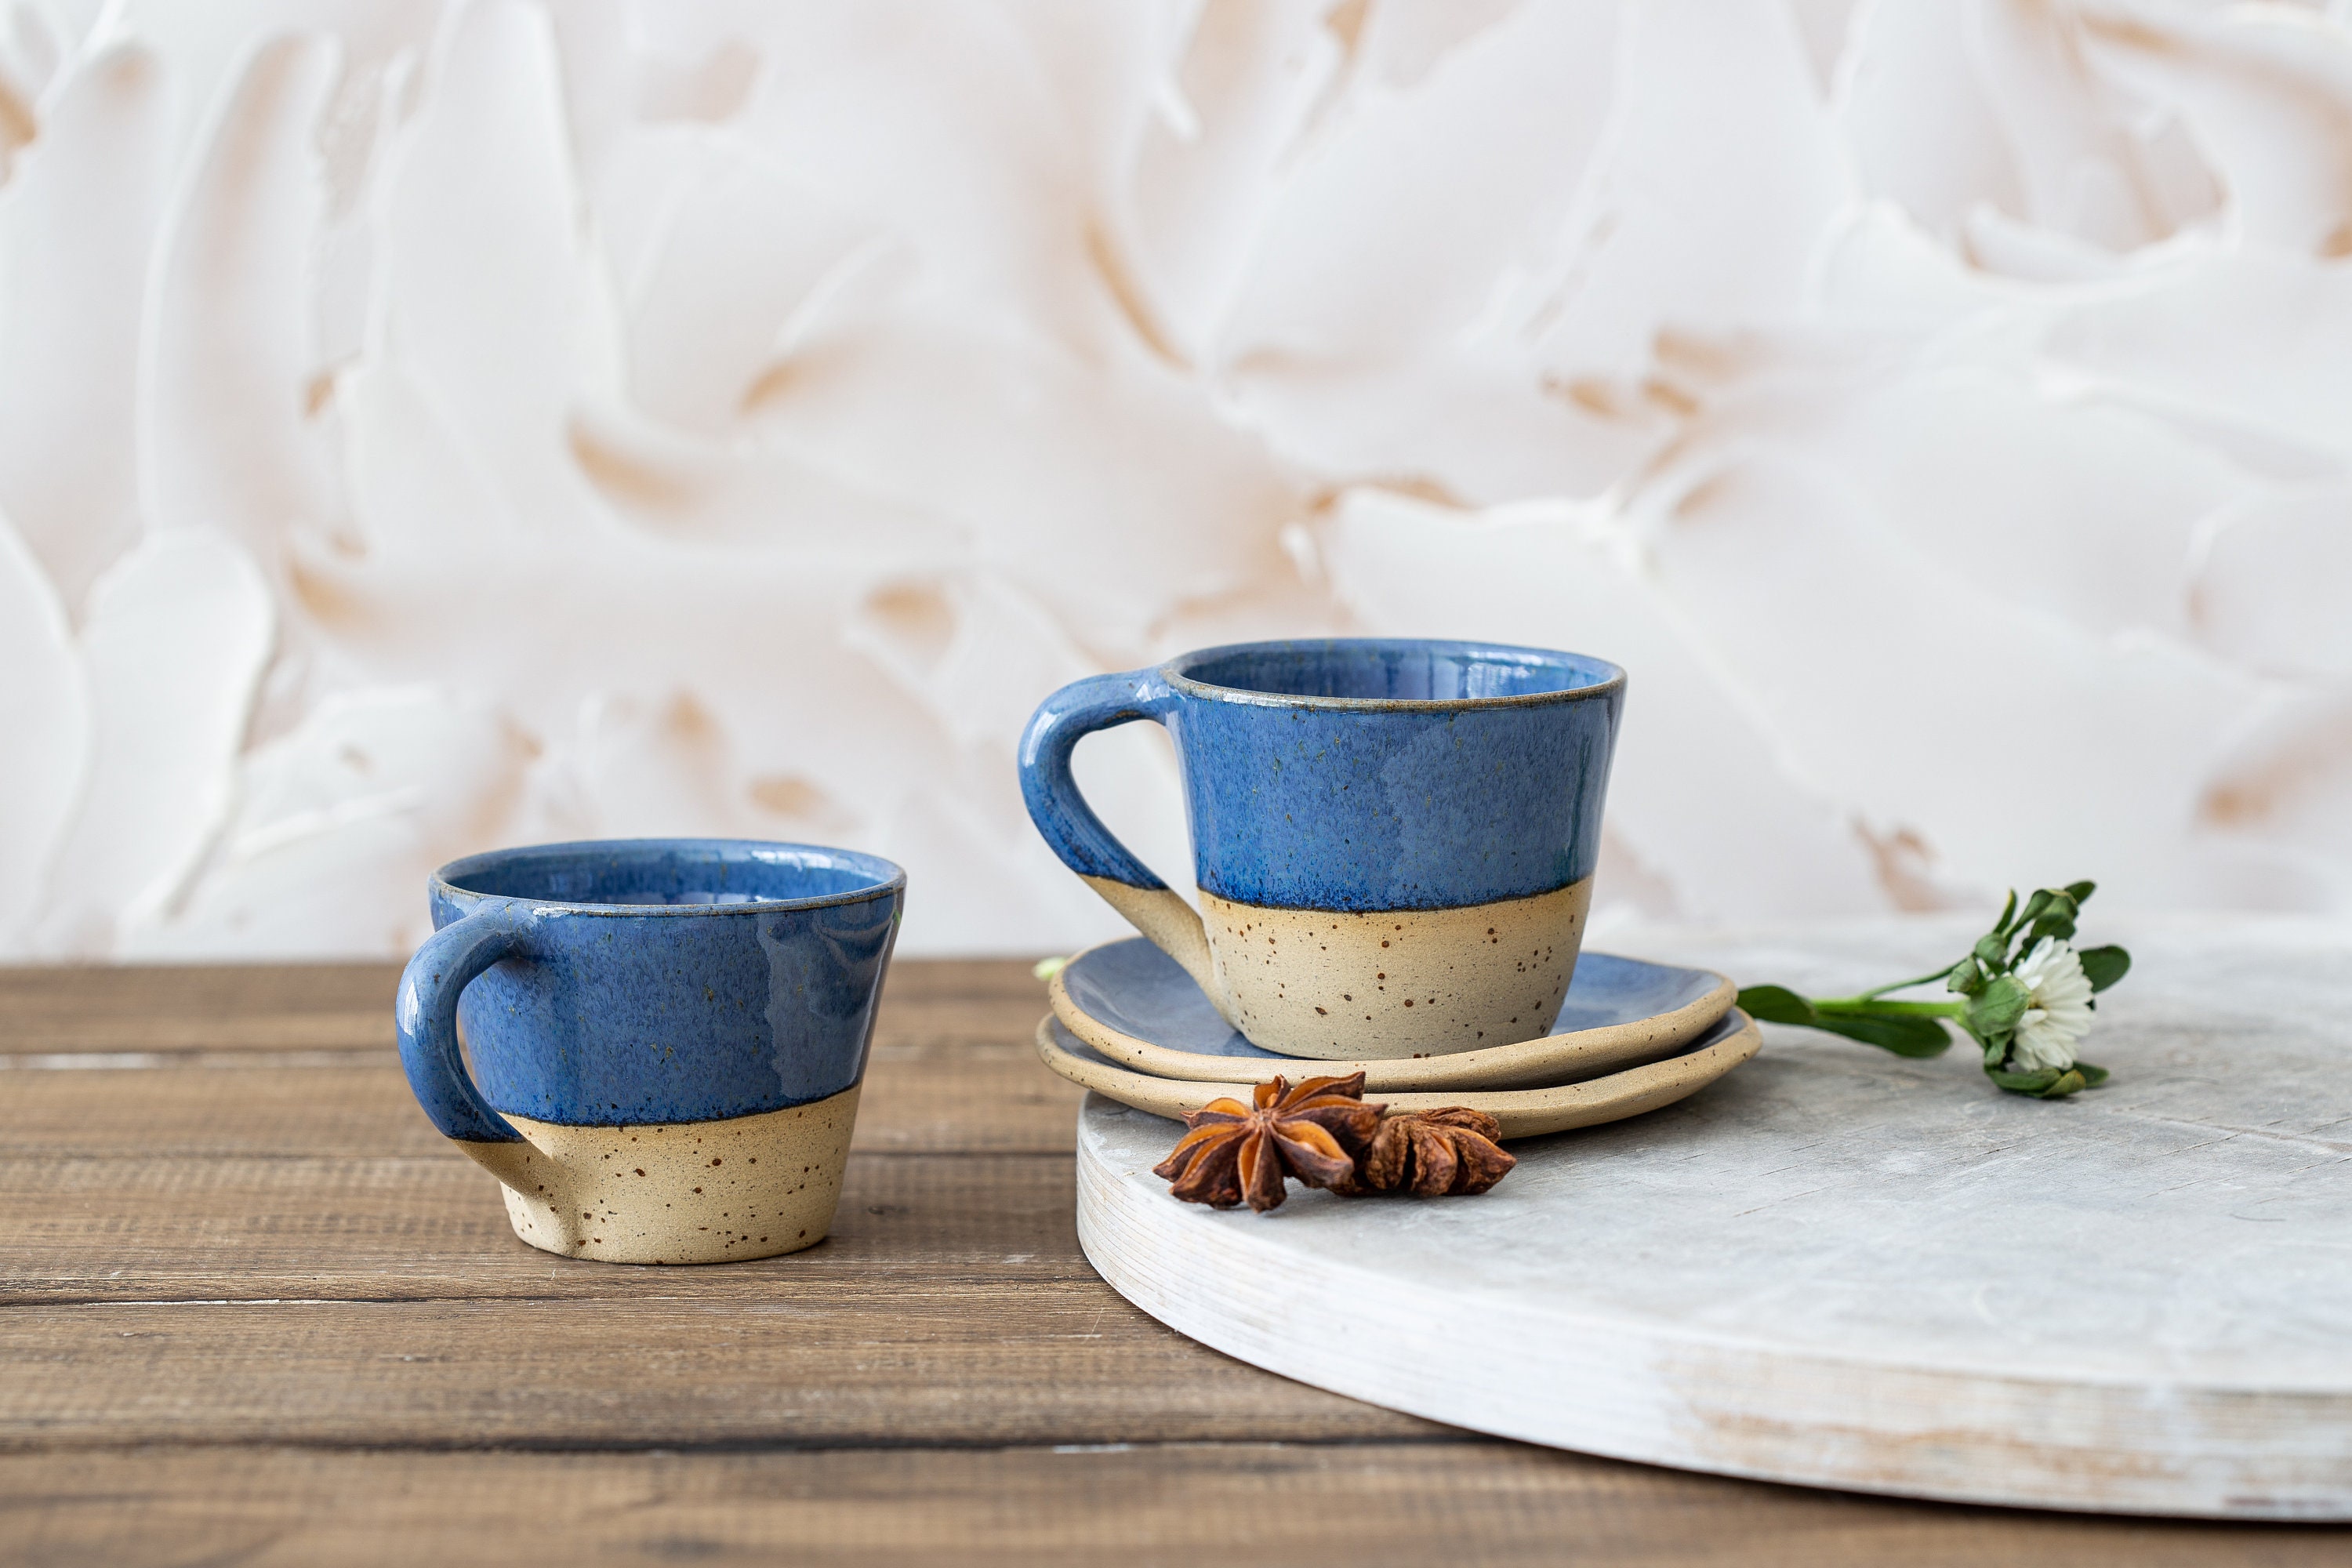 BlogBlog Ceramic Espresso Cups with Wooden Handle Espresso Shot Cups  Ceramic Tea Cups Porcelain Demi…See more BlogBlog Ceramic Espresso Cups  with